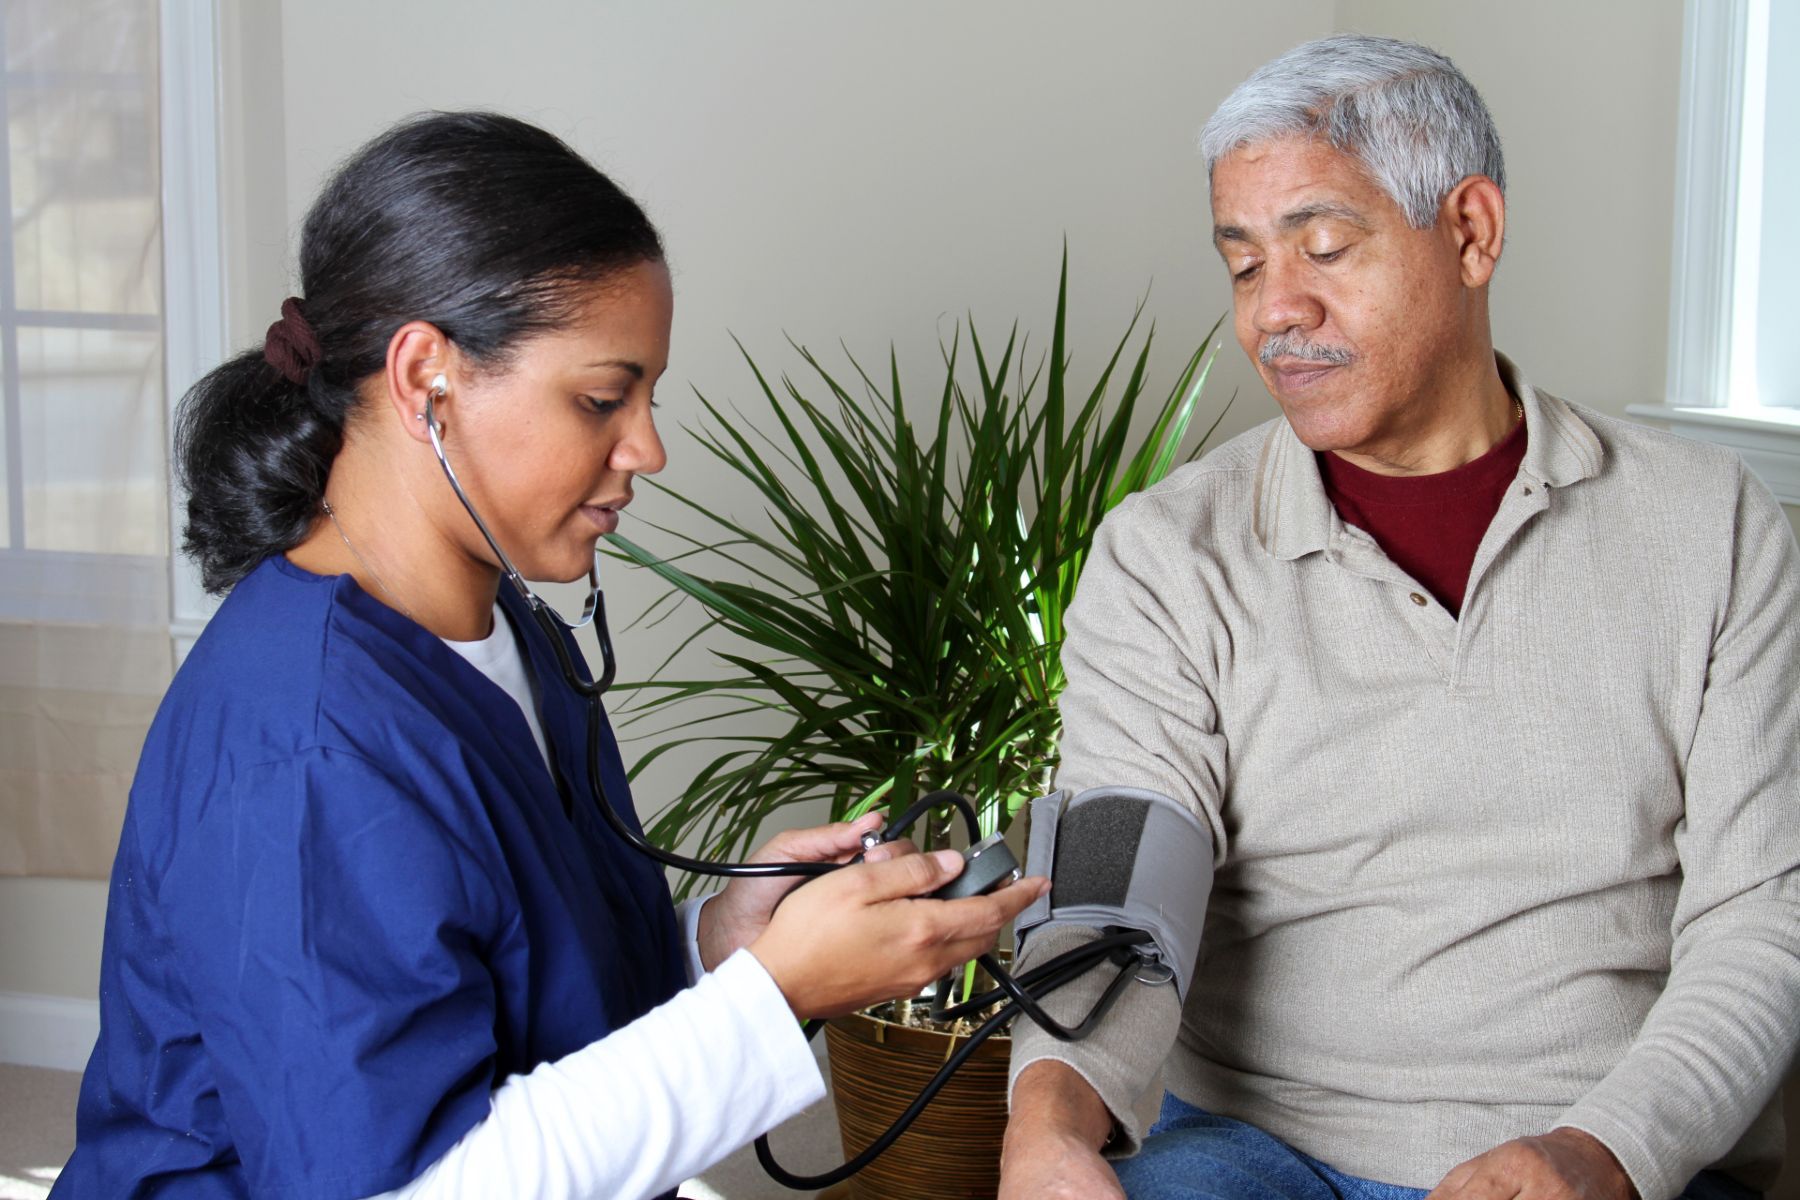 A home health care worker in dark blue scrubs takes an elderly man's blood pressure - humana